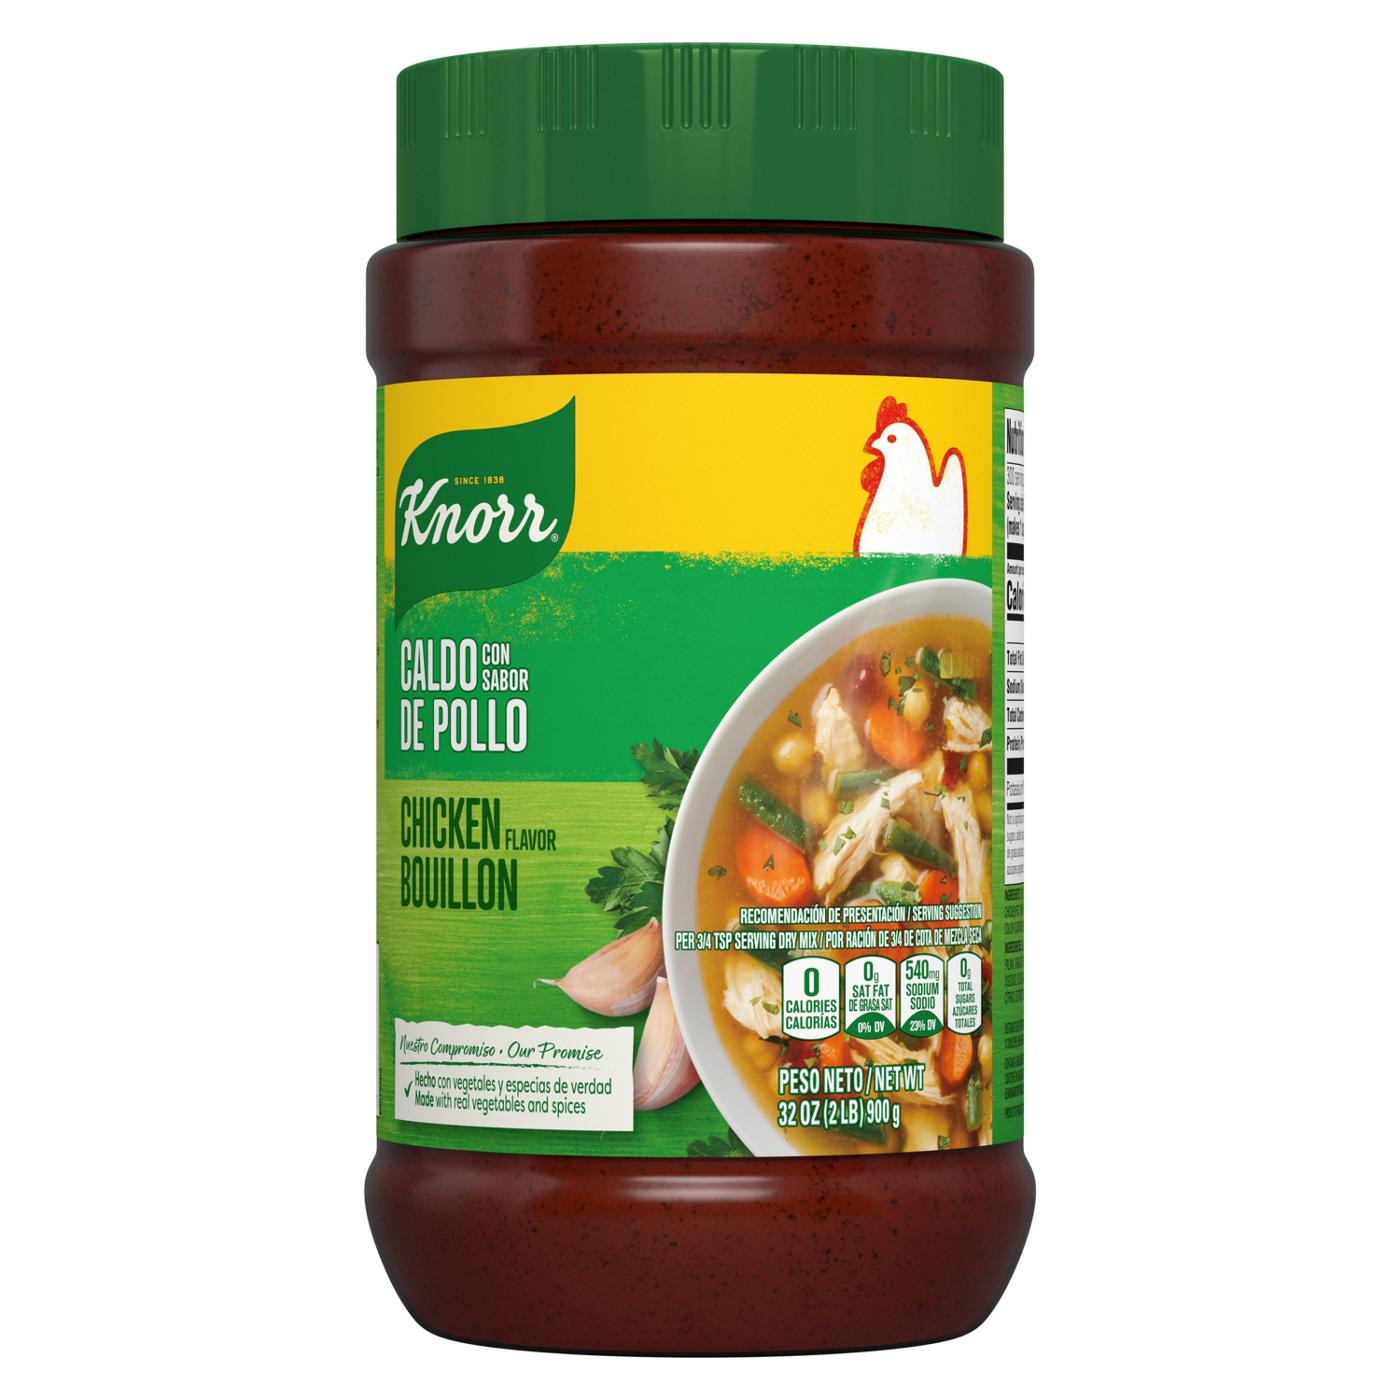 Knorr Bouillon Granulated Shrimp - 7.9 Oz - Safeway